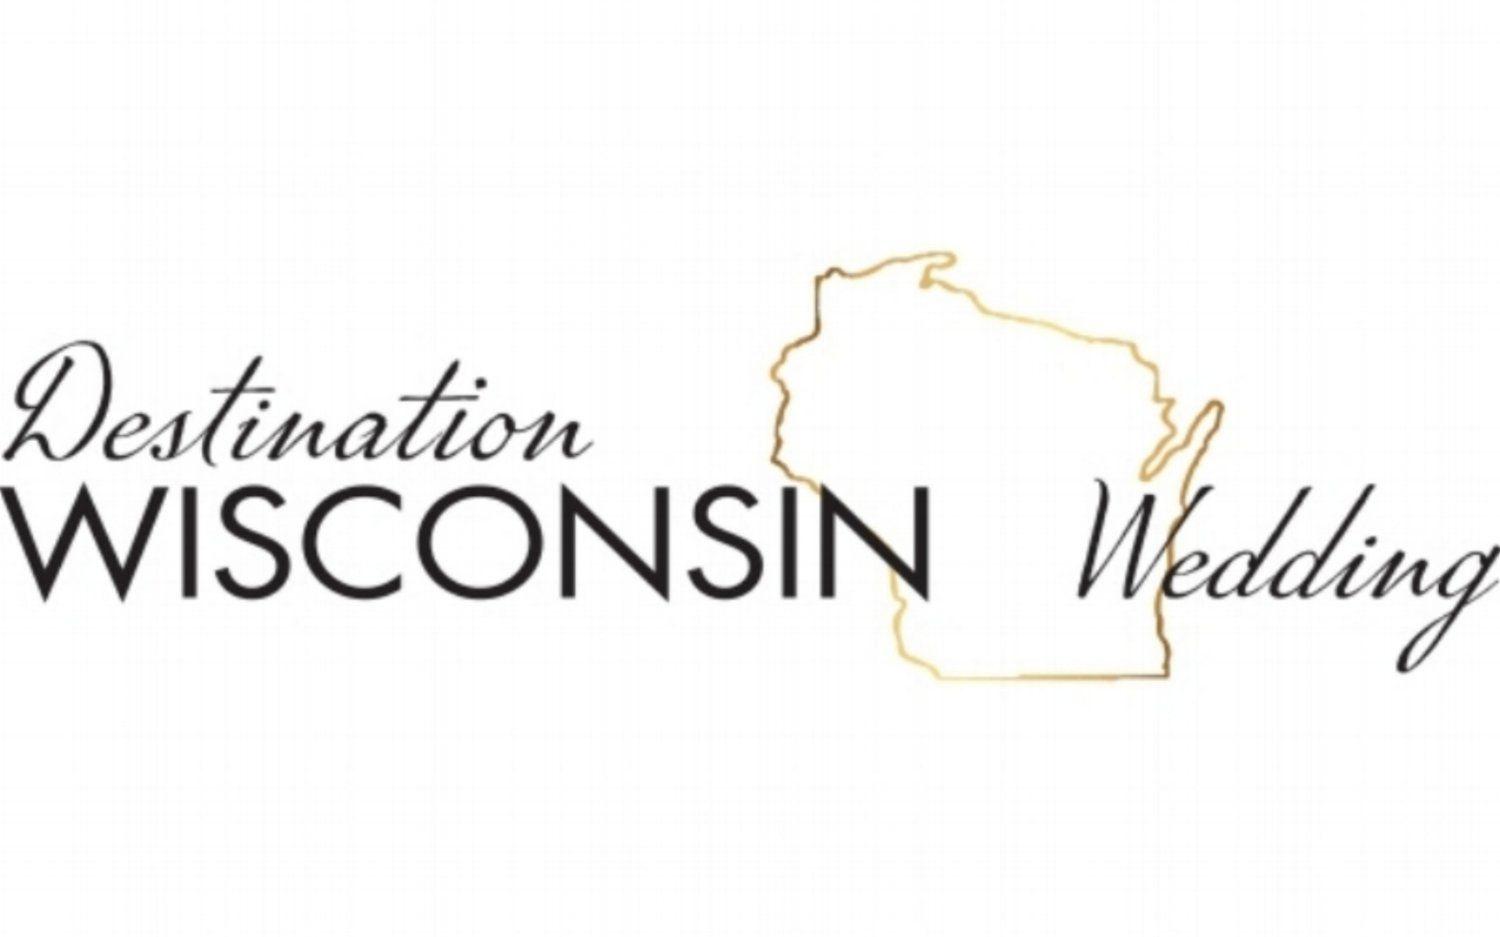 Wedding.com Logo - Destination Wisconsin Wedding